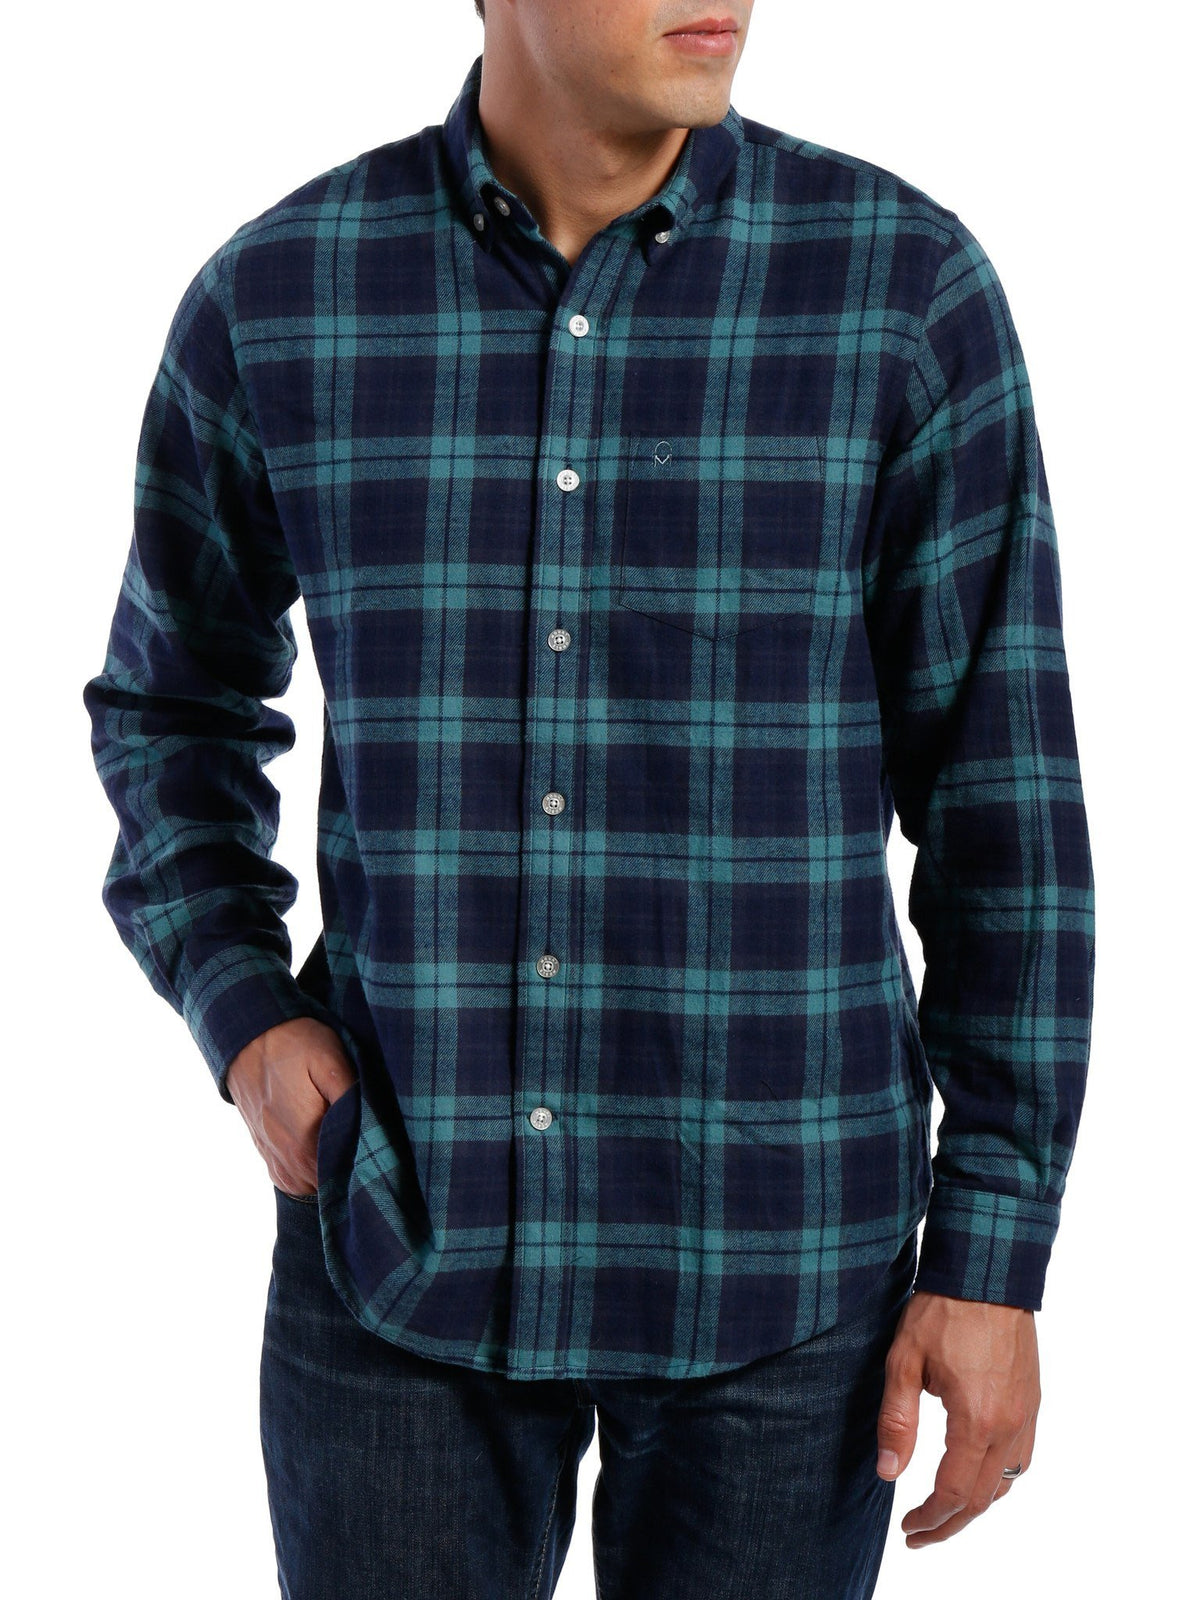 Mens 100% Cotton Flannel Shirt - Regular Fit - Navy-Green Plaid